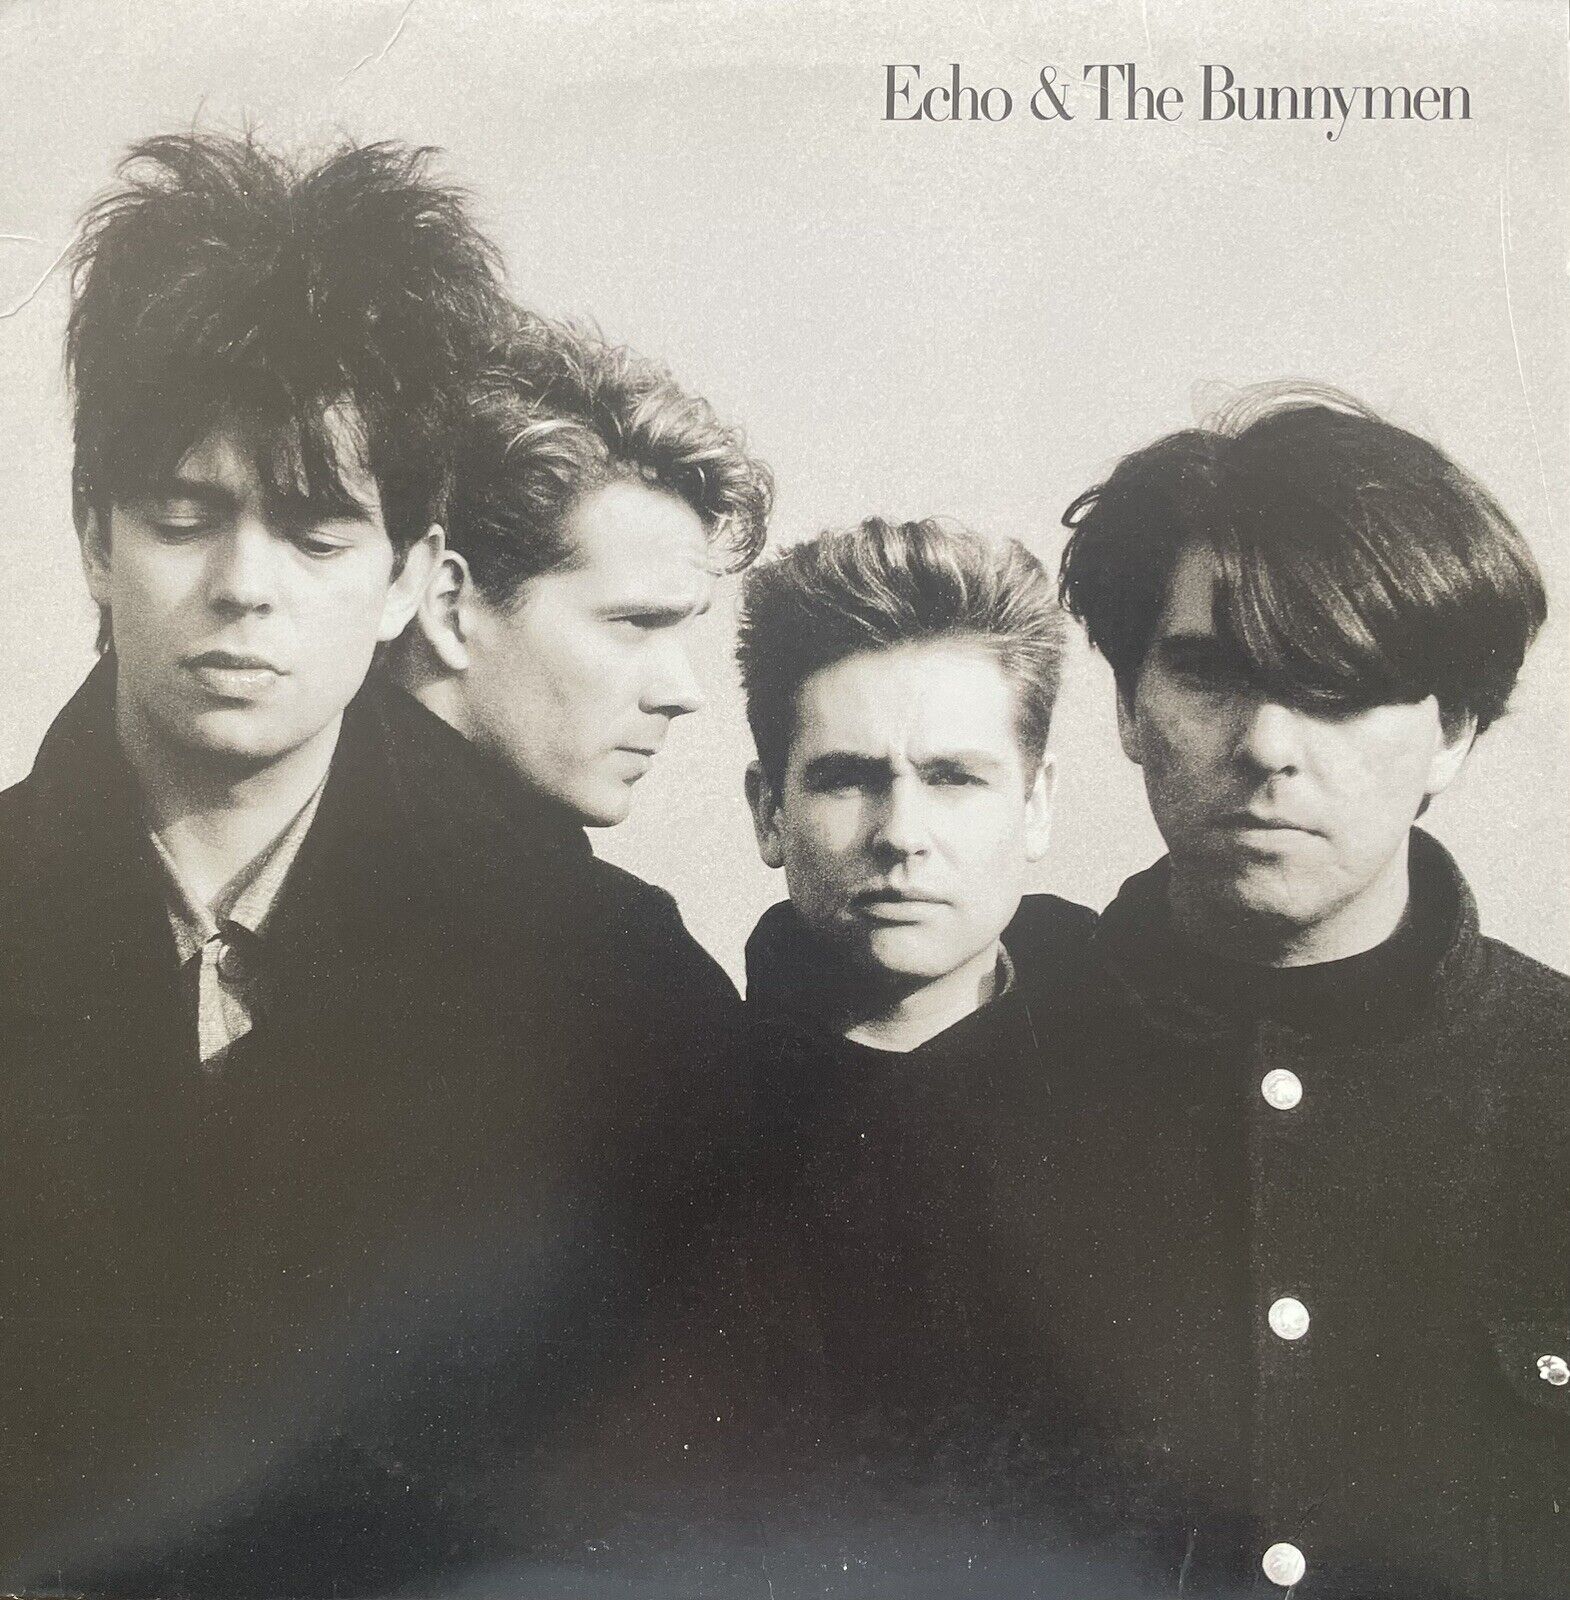 Echo & The Bunnymen - Echo & The Bunnymen (LP, Album, All) (Very Good Plus (VG+)